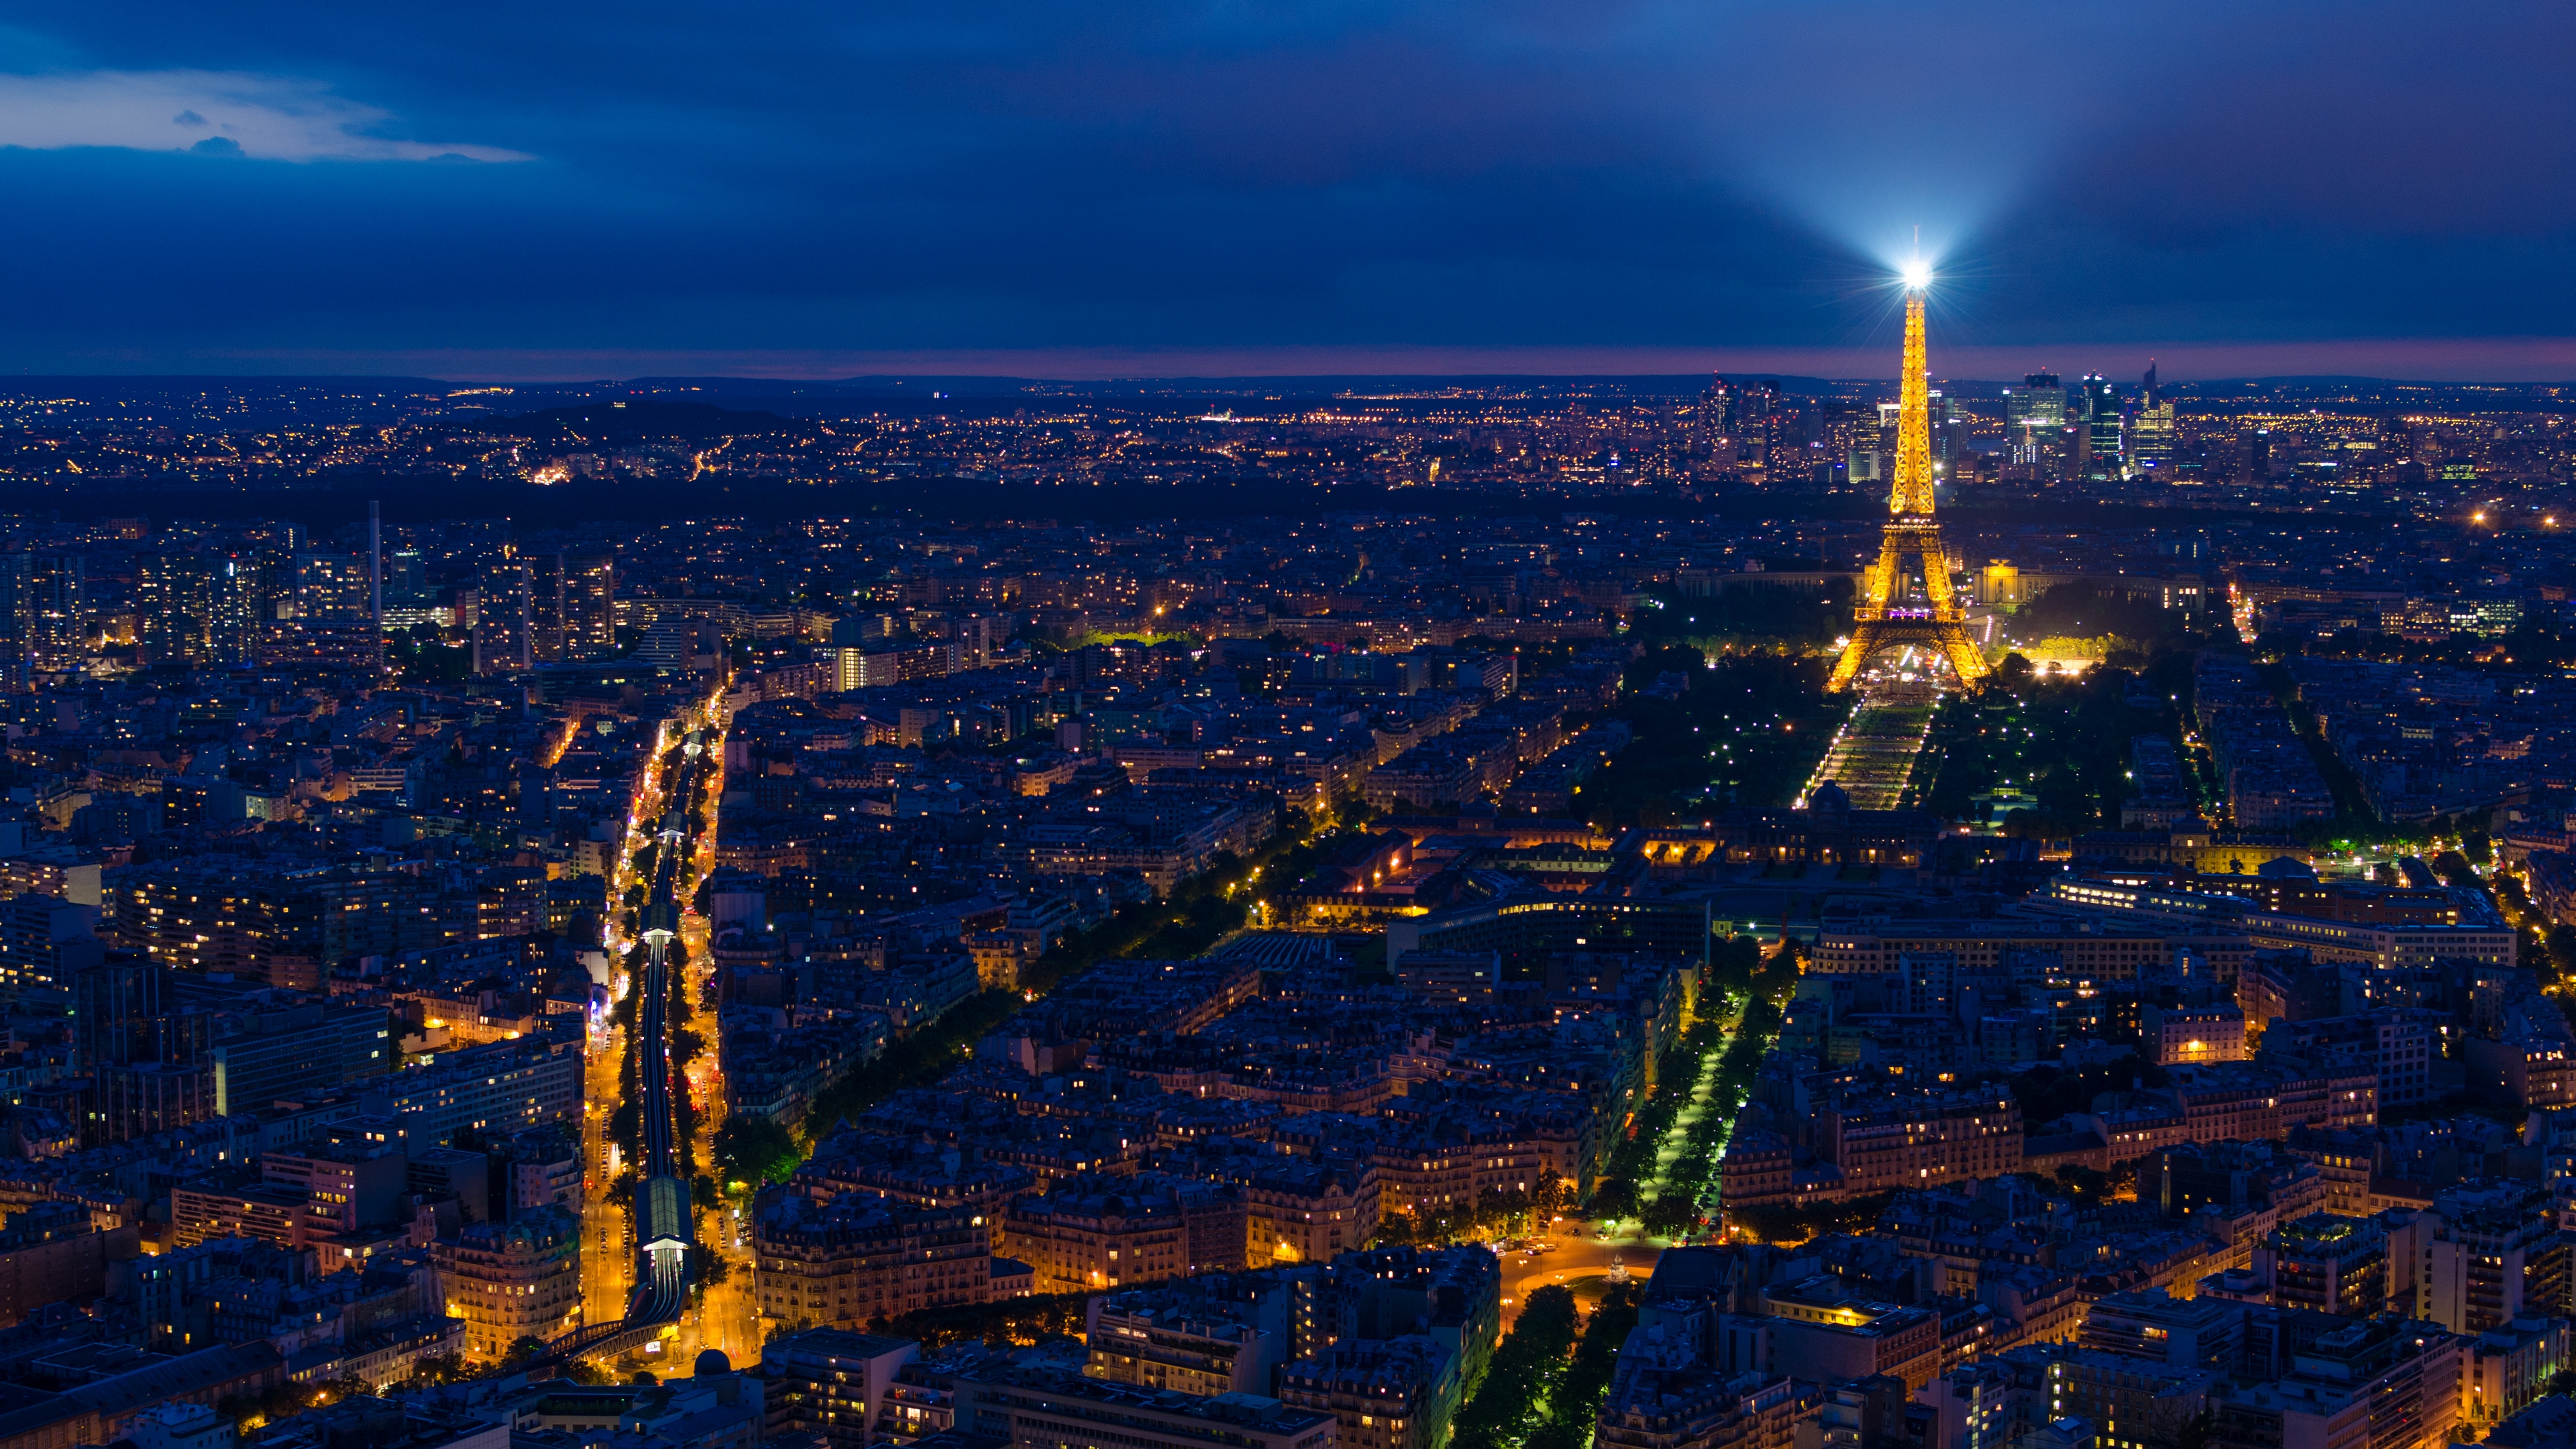 Eiffel Tower Night City Paris France City Lights 4k